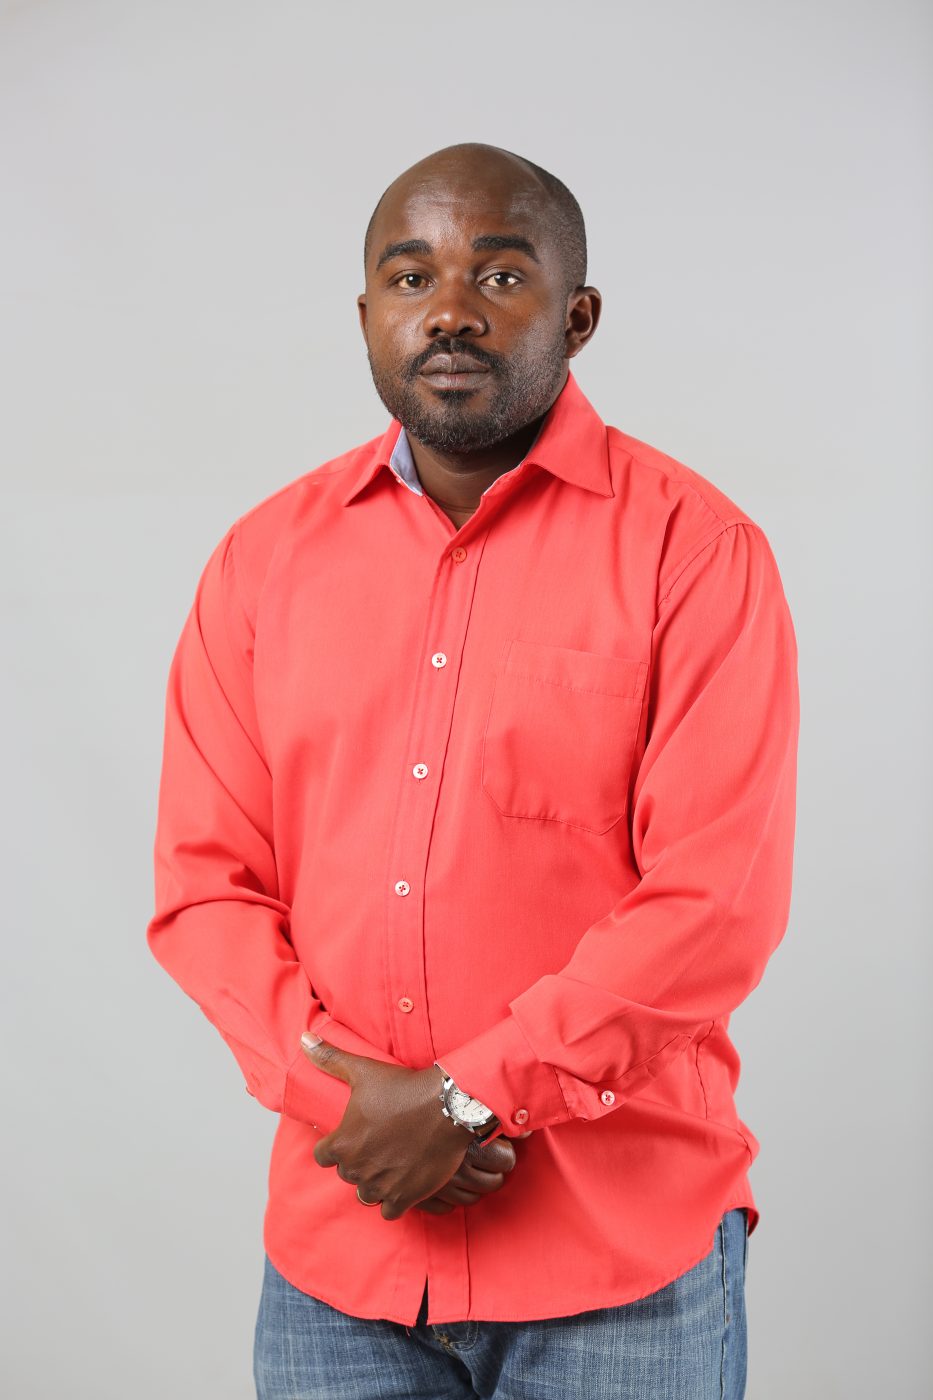 Reuben Odanga directs Selina, now on Shwomax